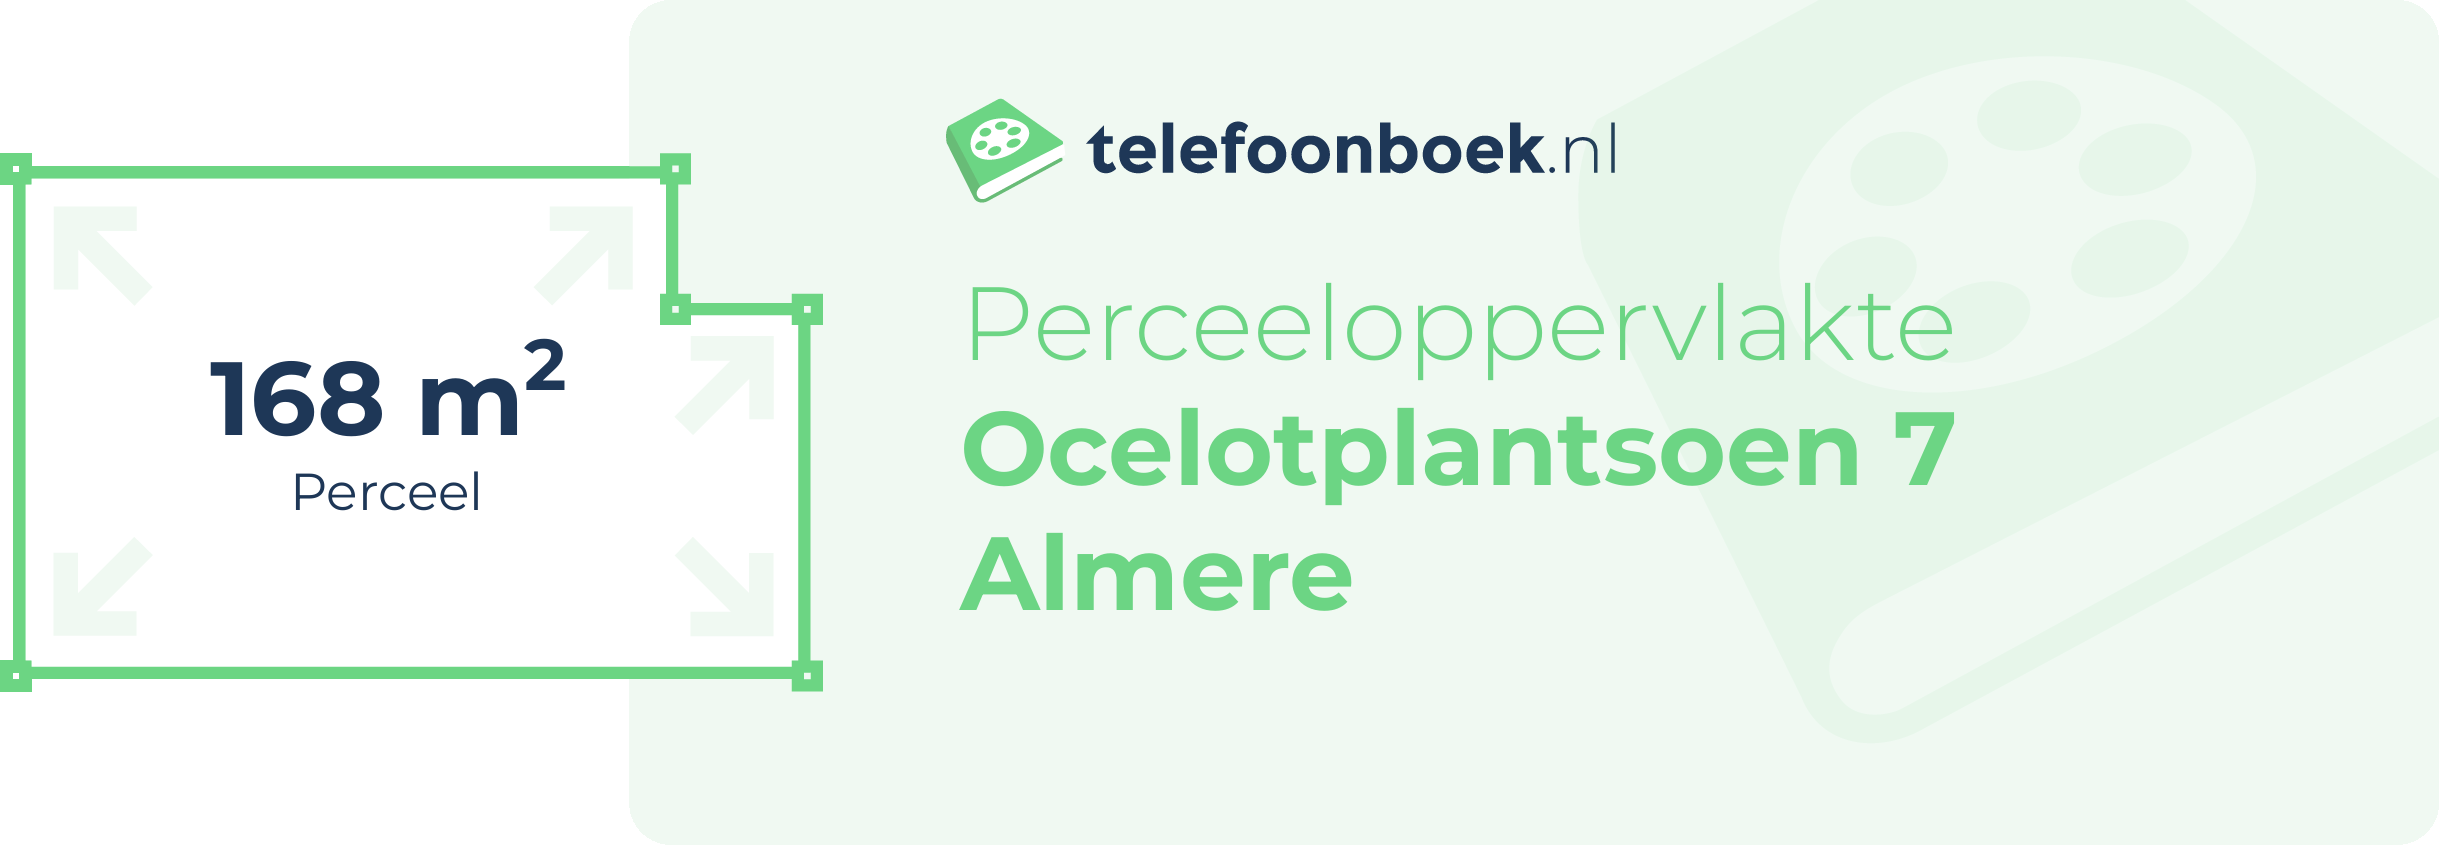 Perceeloppervlakte Ocelotplantsoen 7 Almere